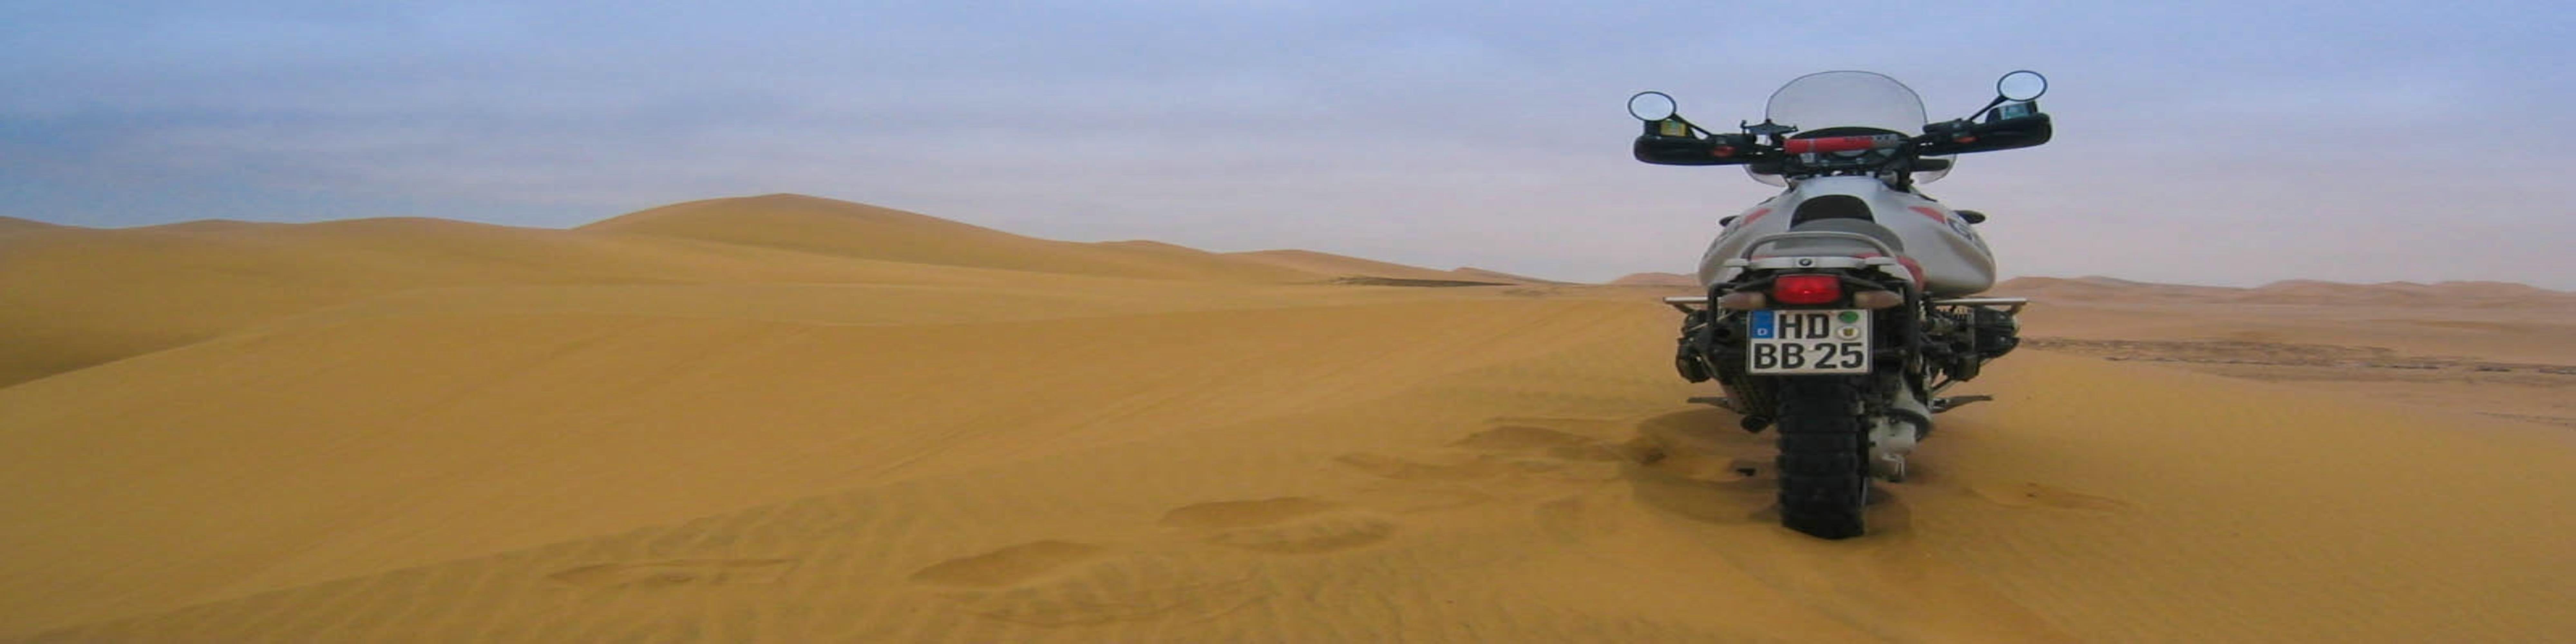 dunes (Copy).jpg